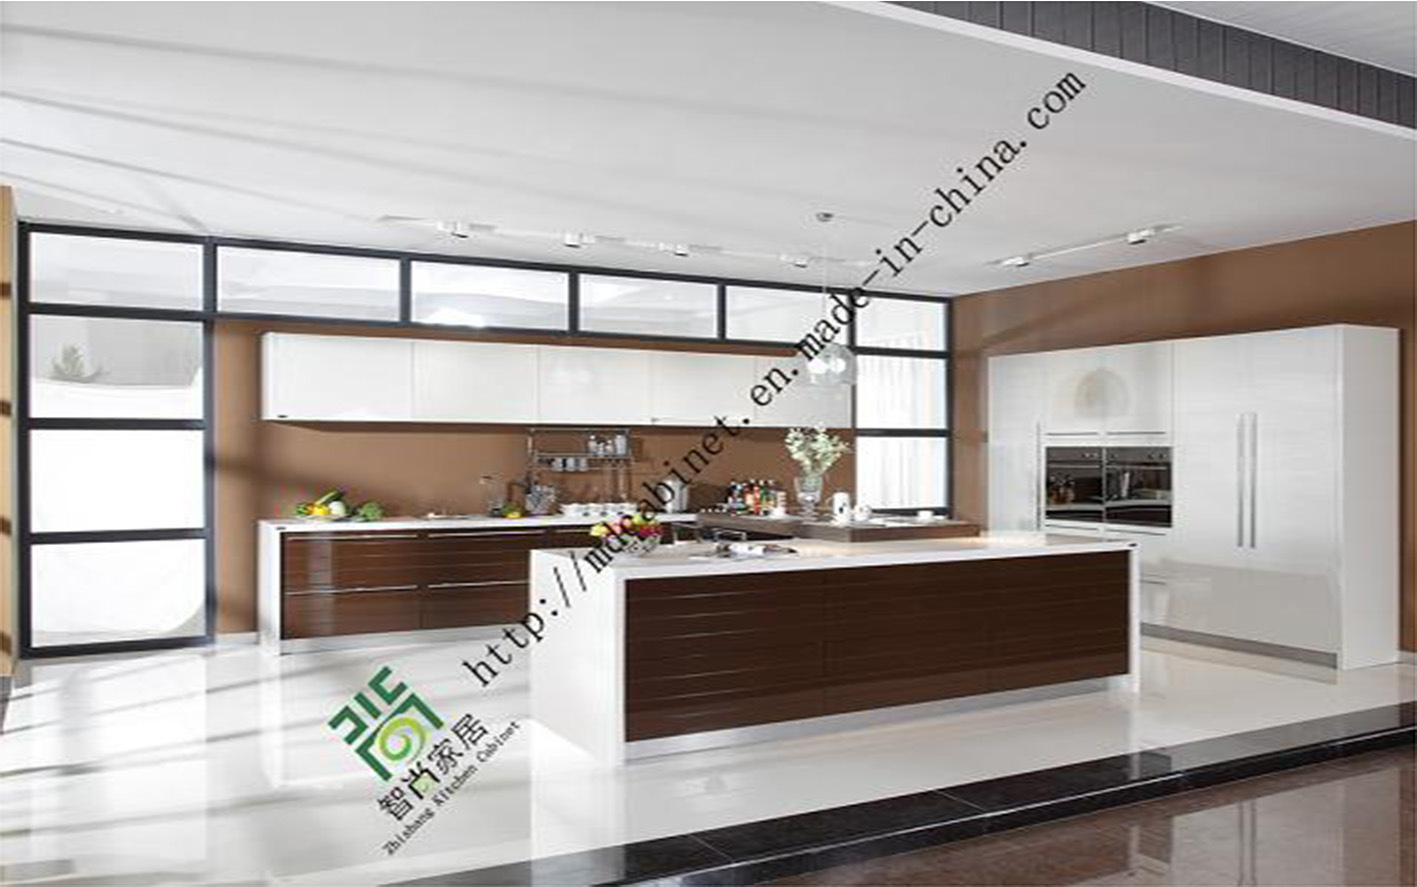 New Design White PVC MDF Panel Kitchen Cabinet